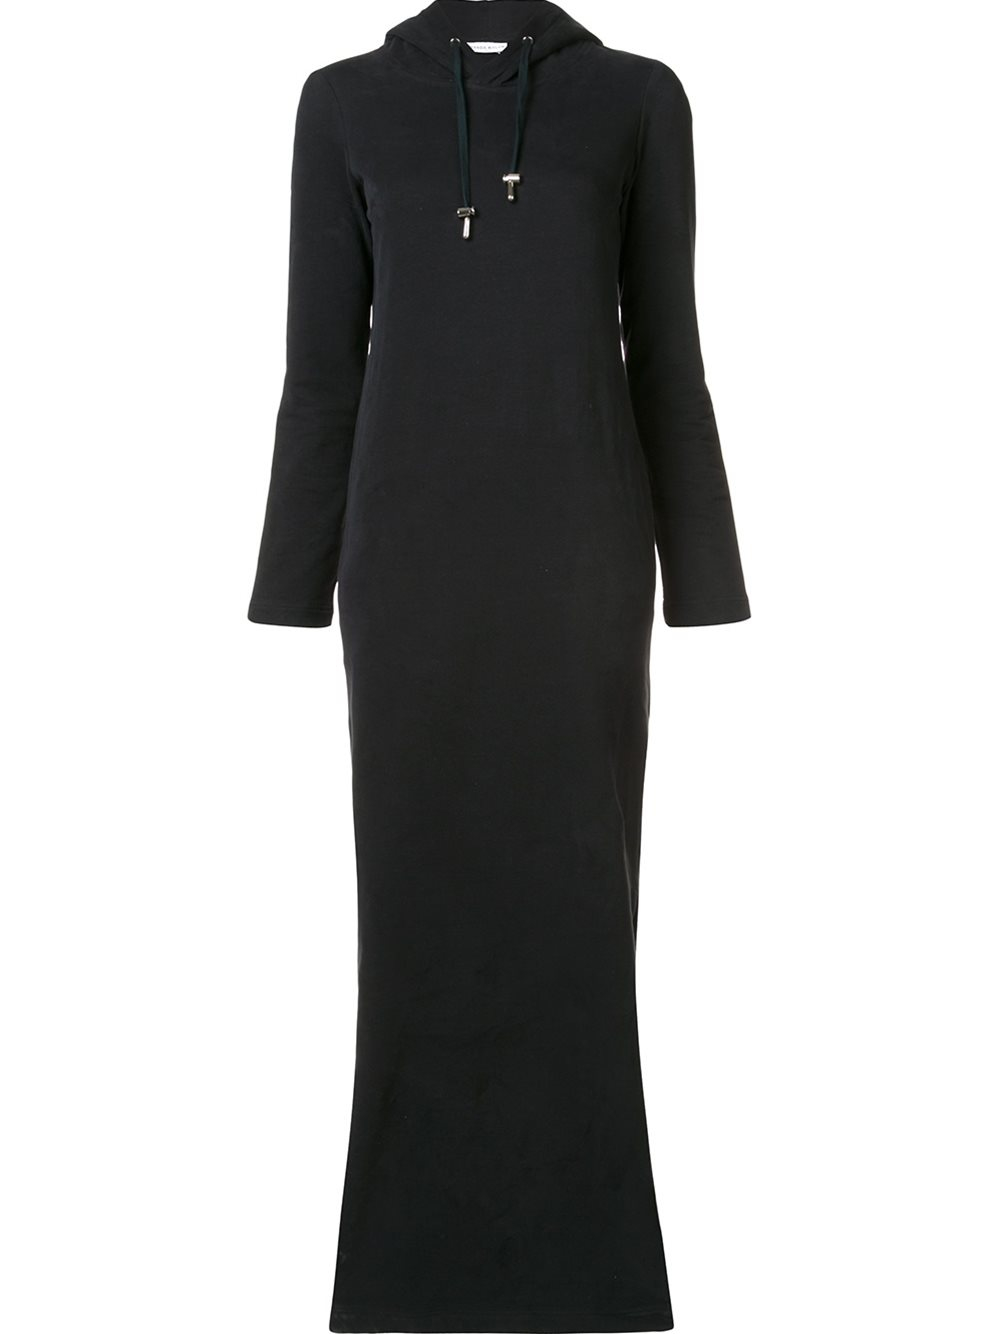 Lyst - Wanda Nylon 'Daria' Dress in Black